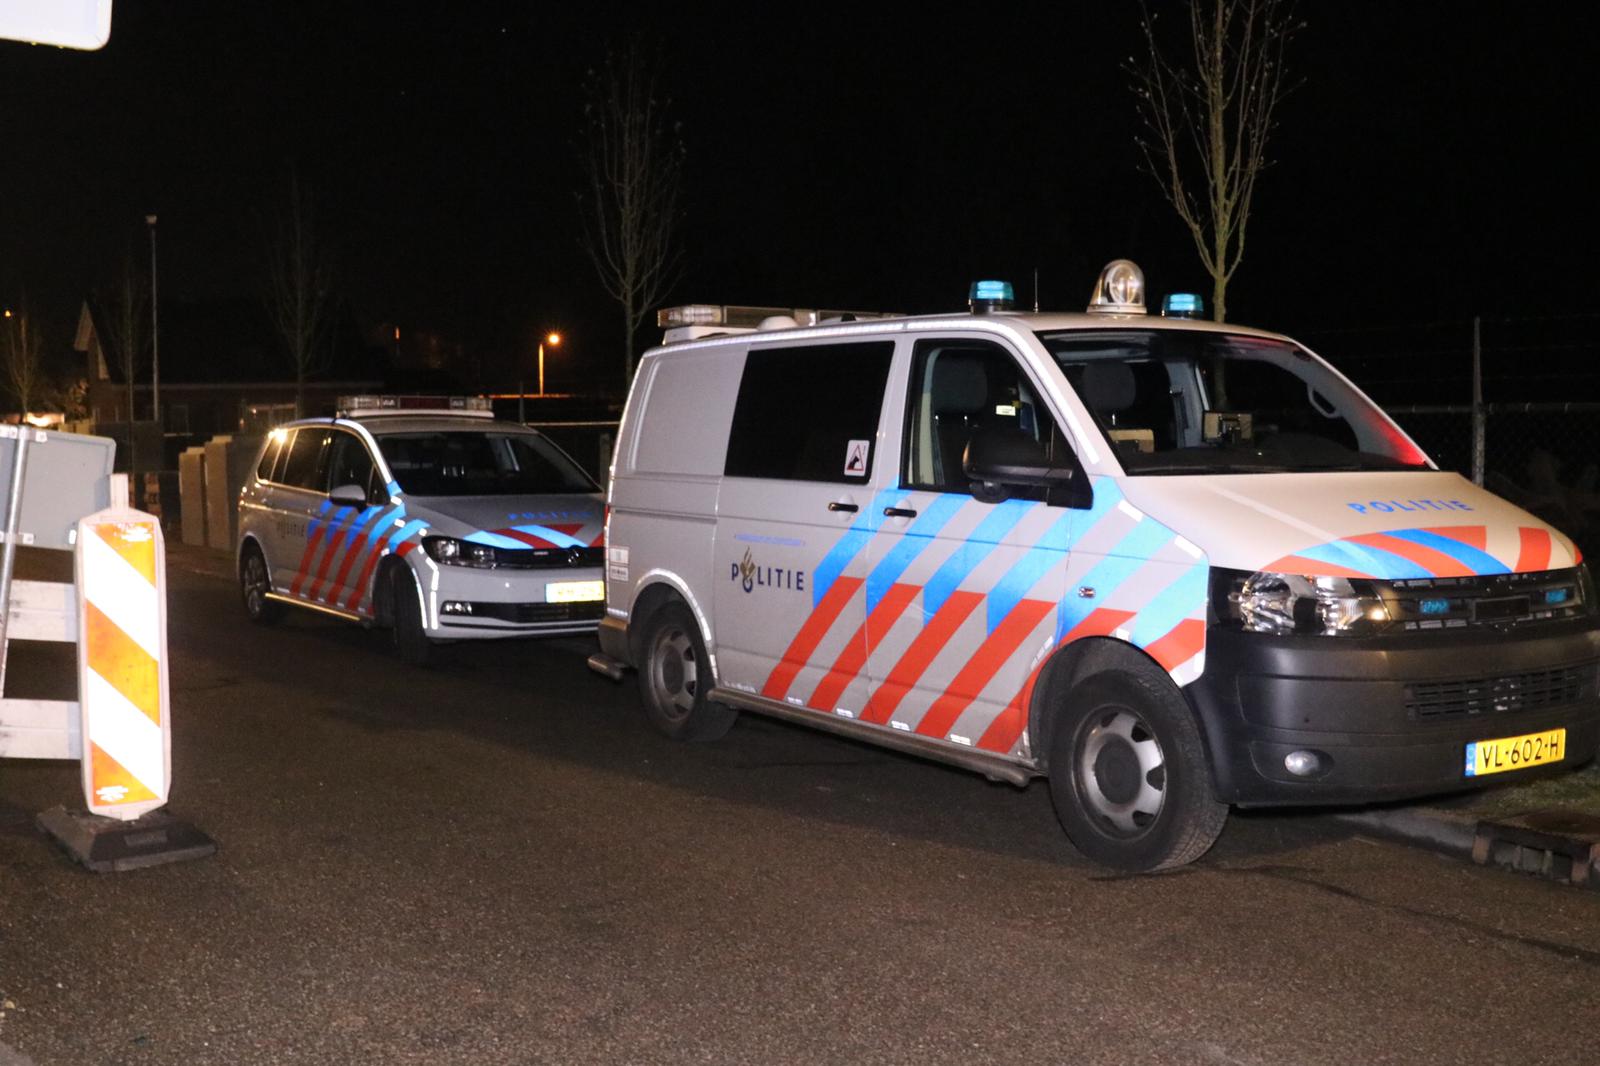 Woningoverval in Klarenbeek; politie komt met spoed ter plaatse